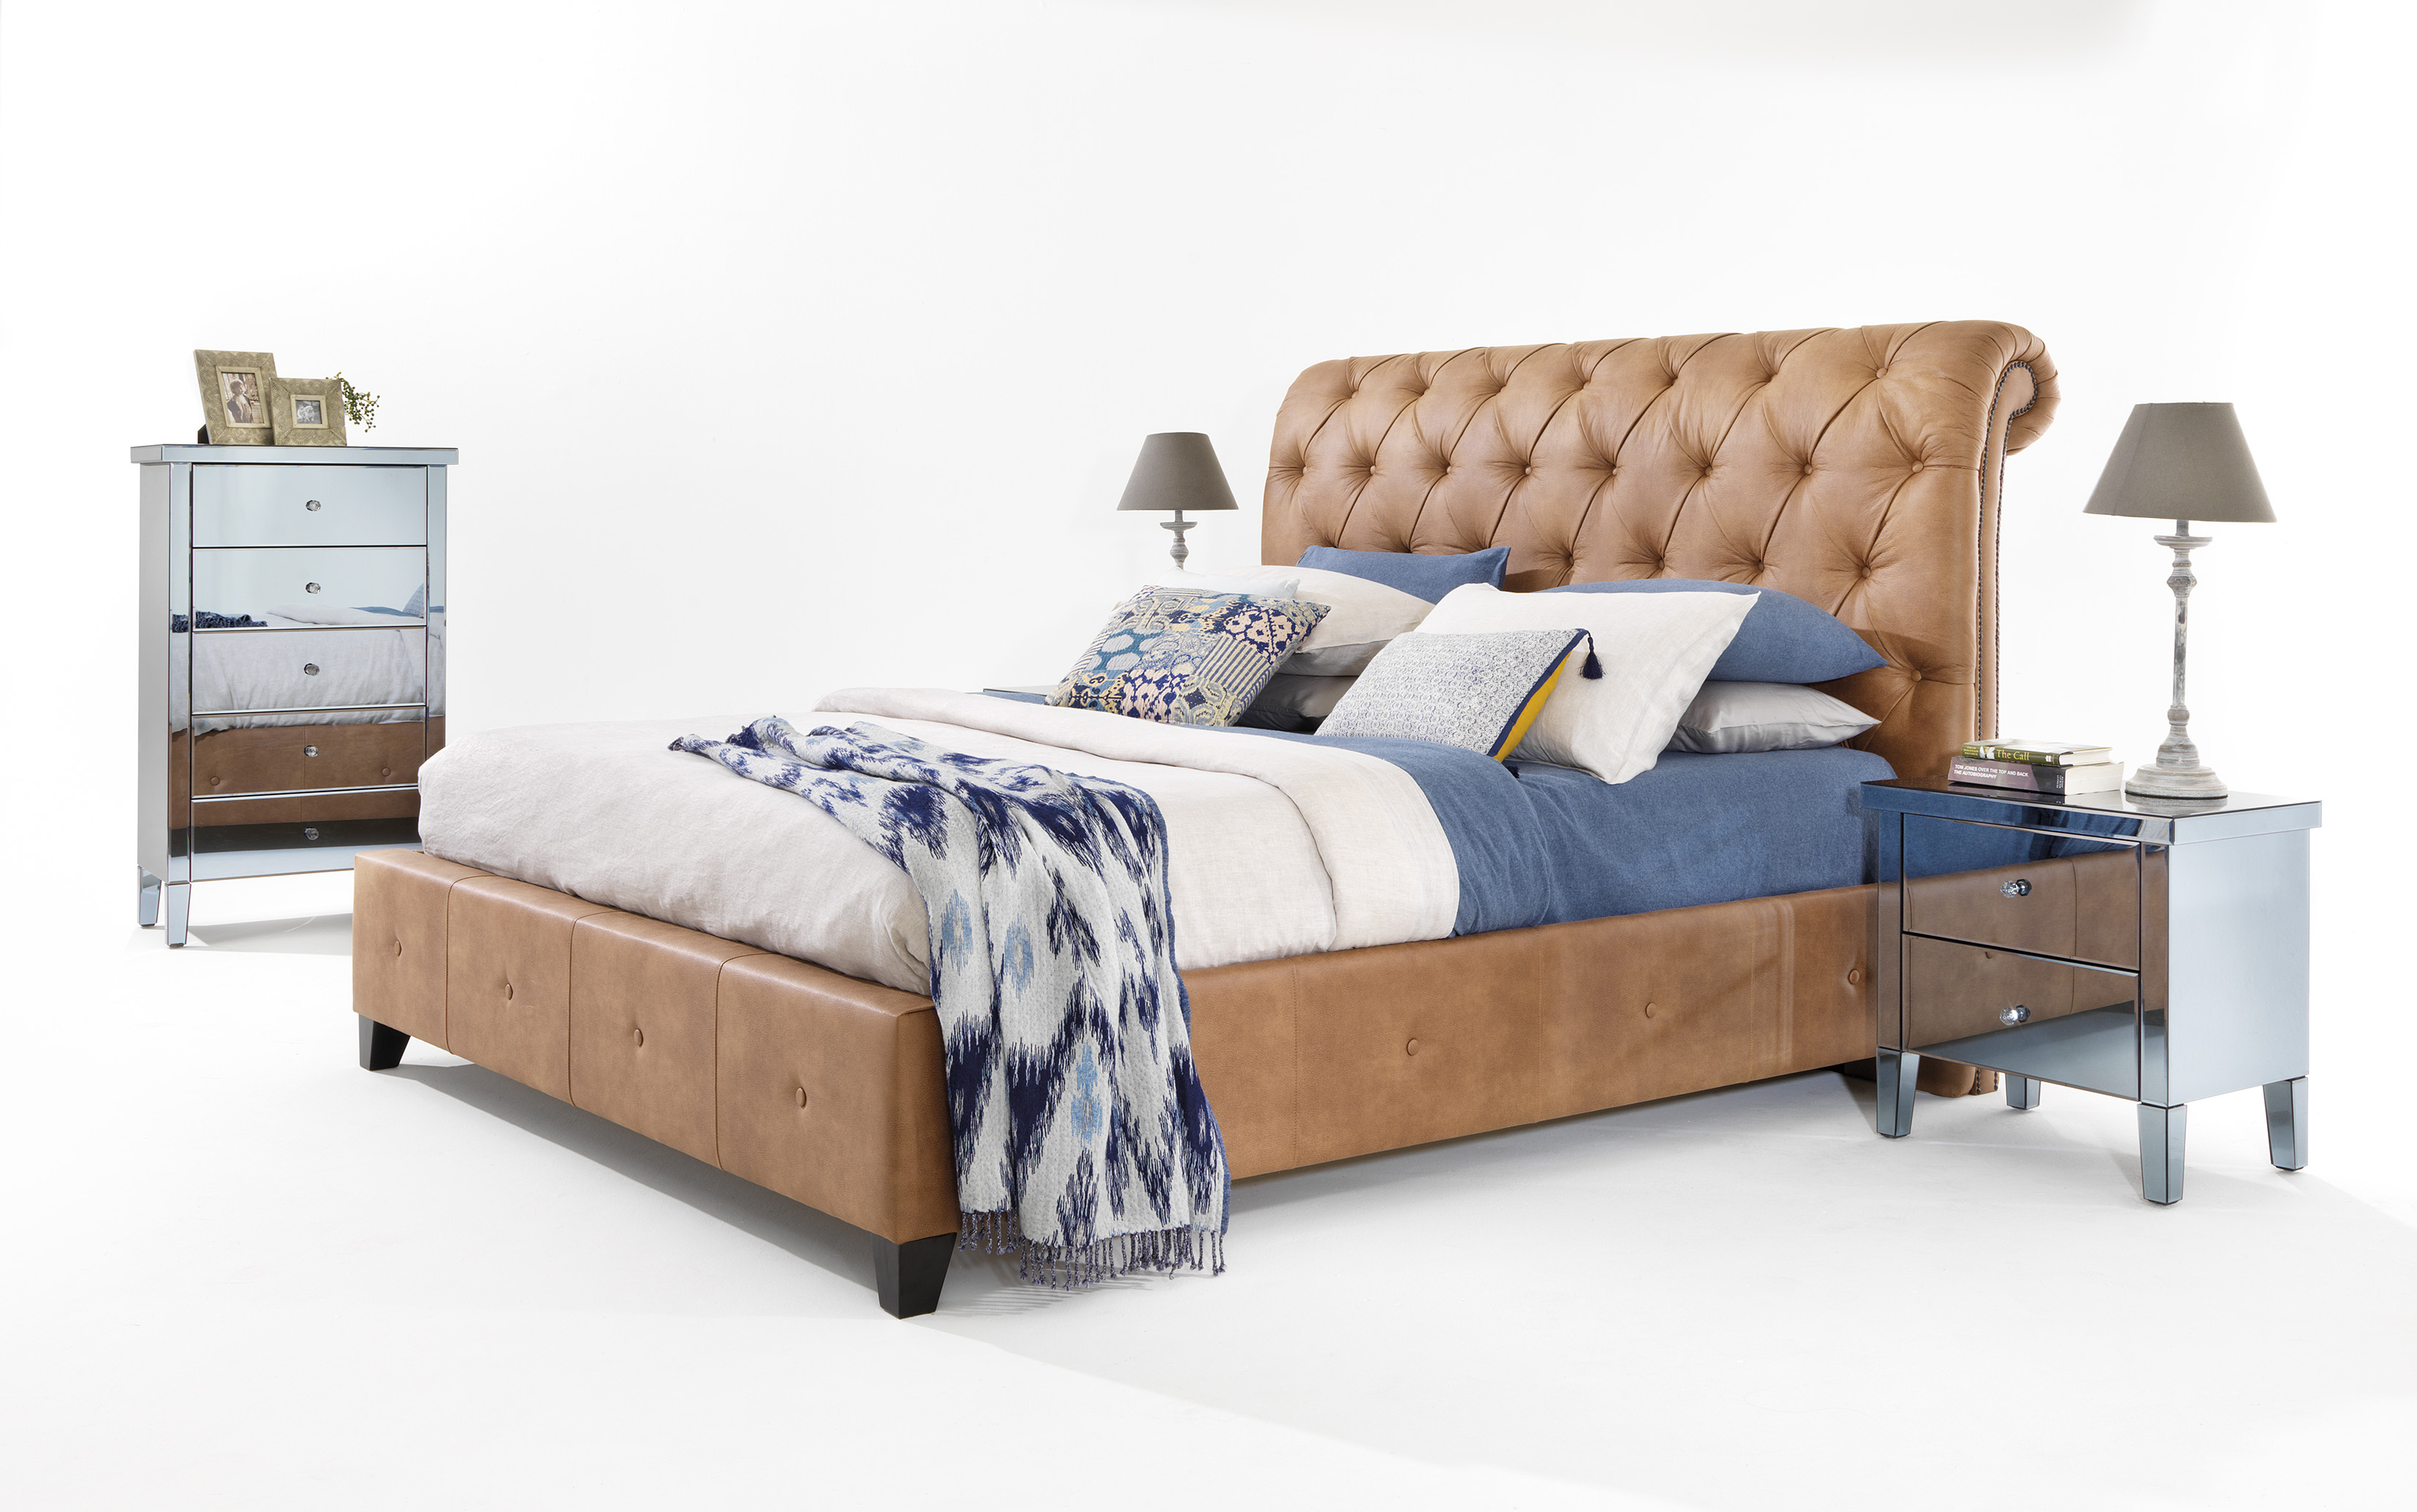 LV Furniture - The Australian Made Campaign